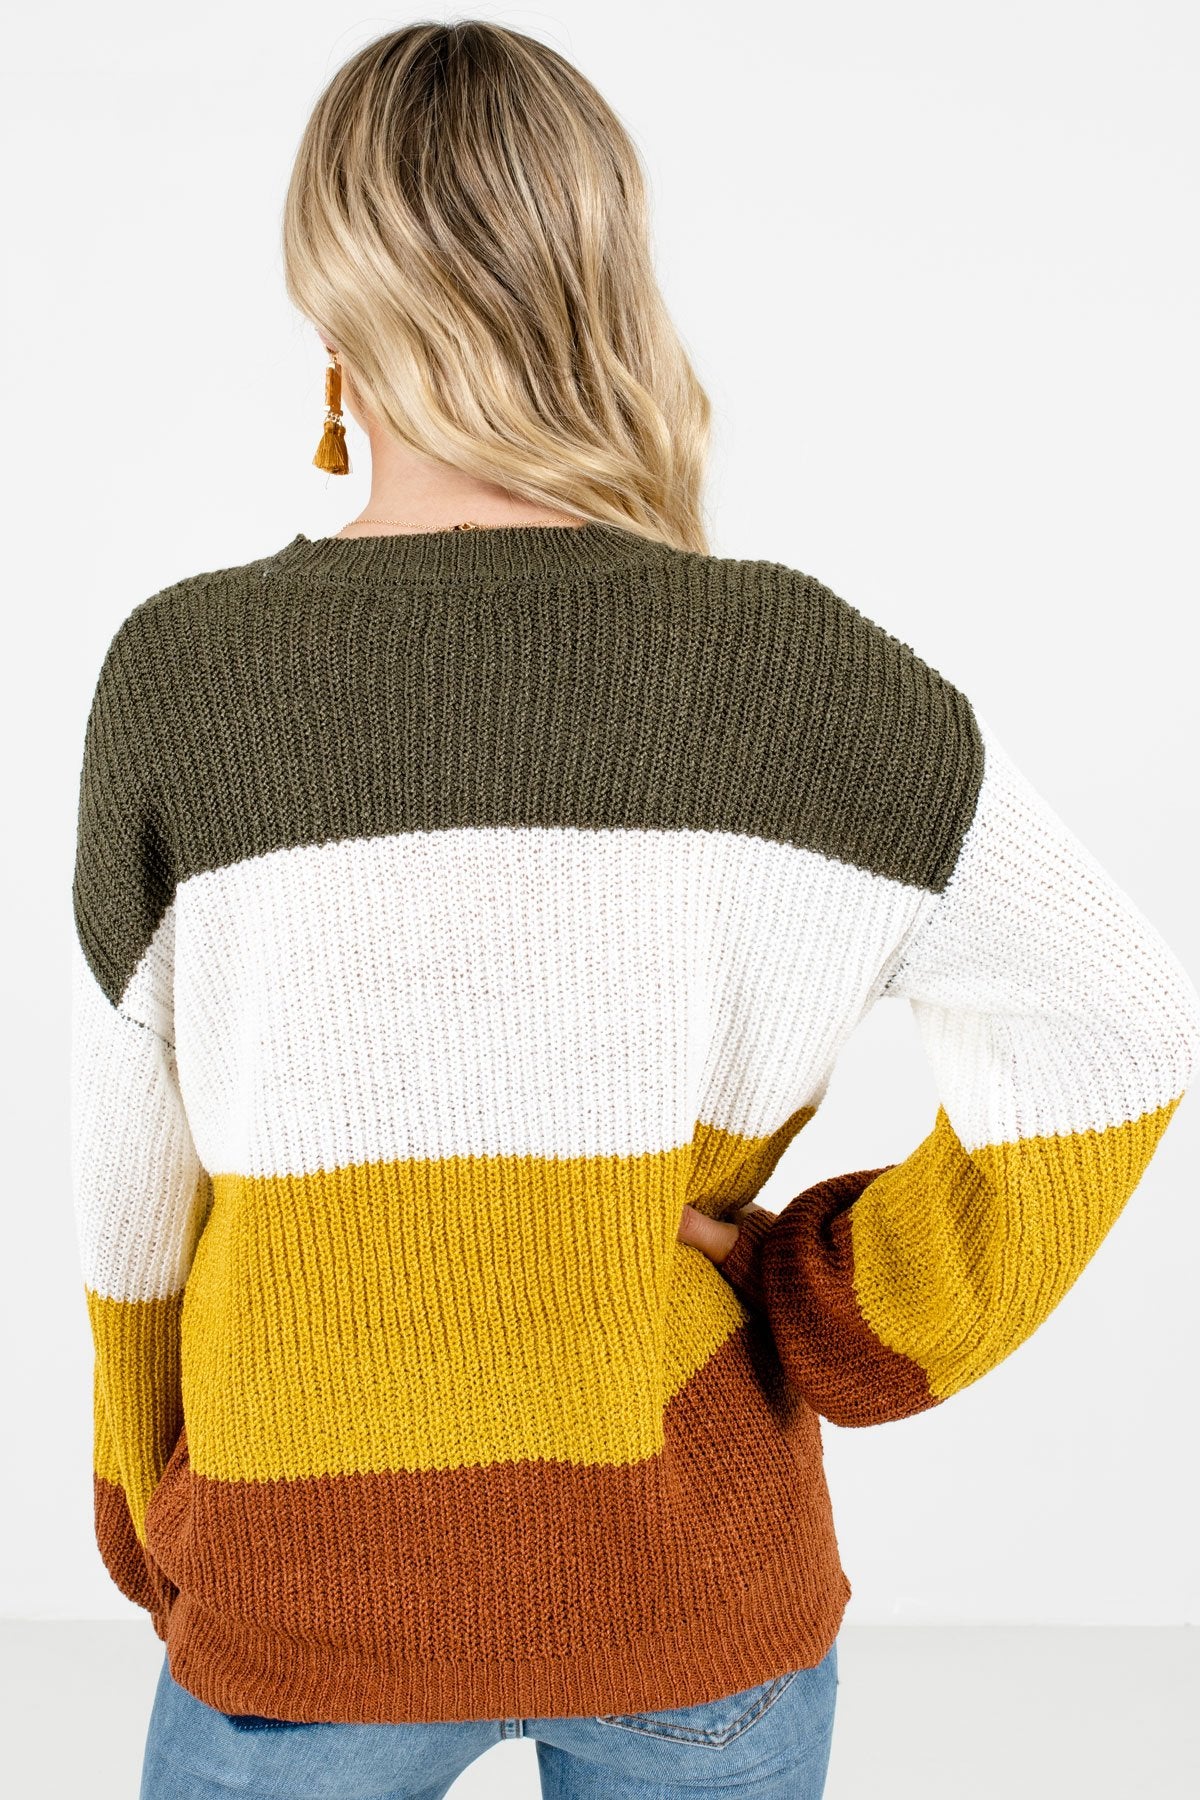 Women’s Mustard Yellow Lightweight Knit Material Boutique Sweater